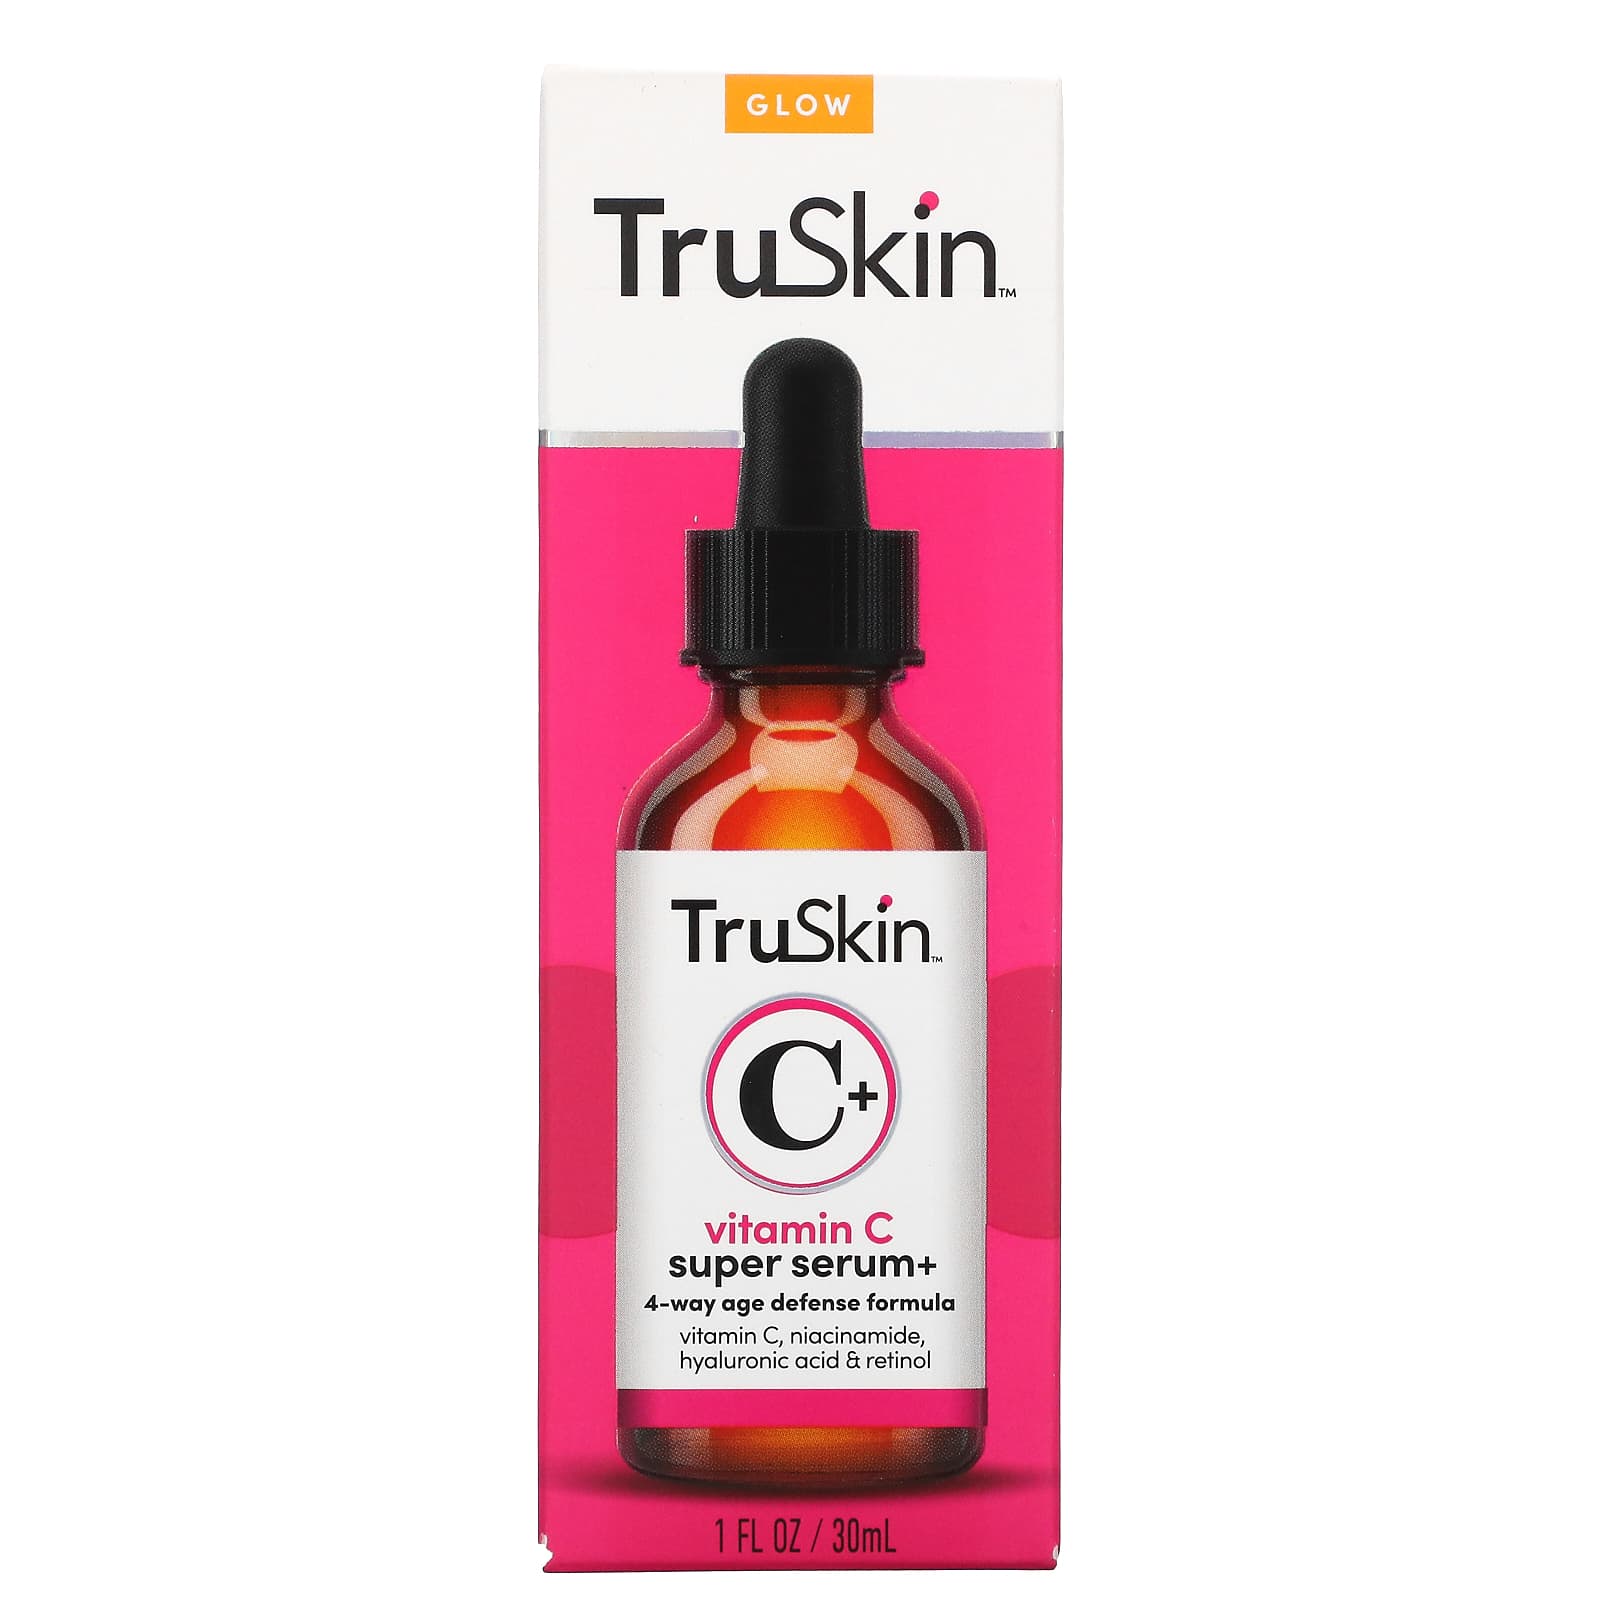 TruSkin, Vitamin C Super Serum+, fl oz (30